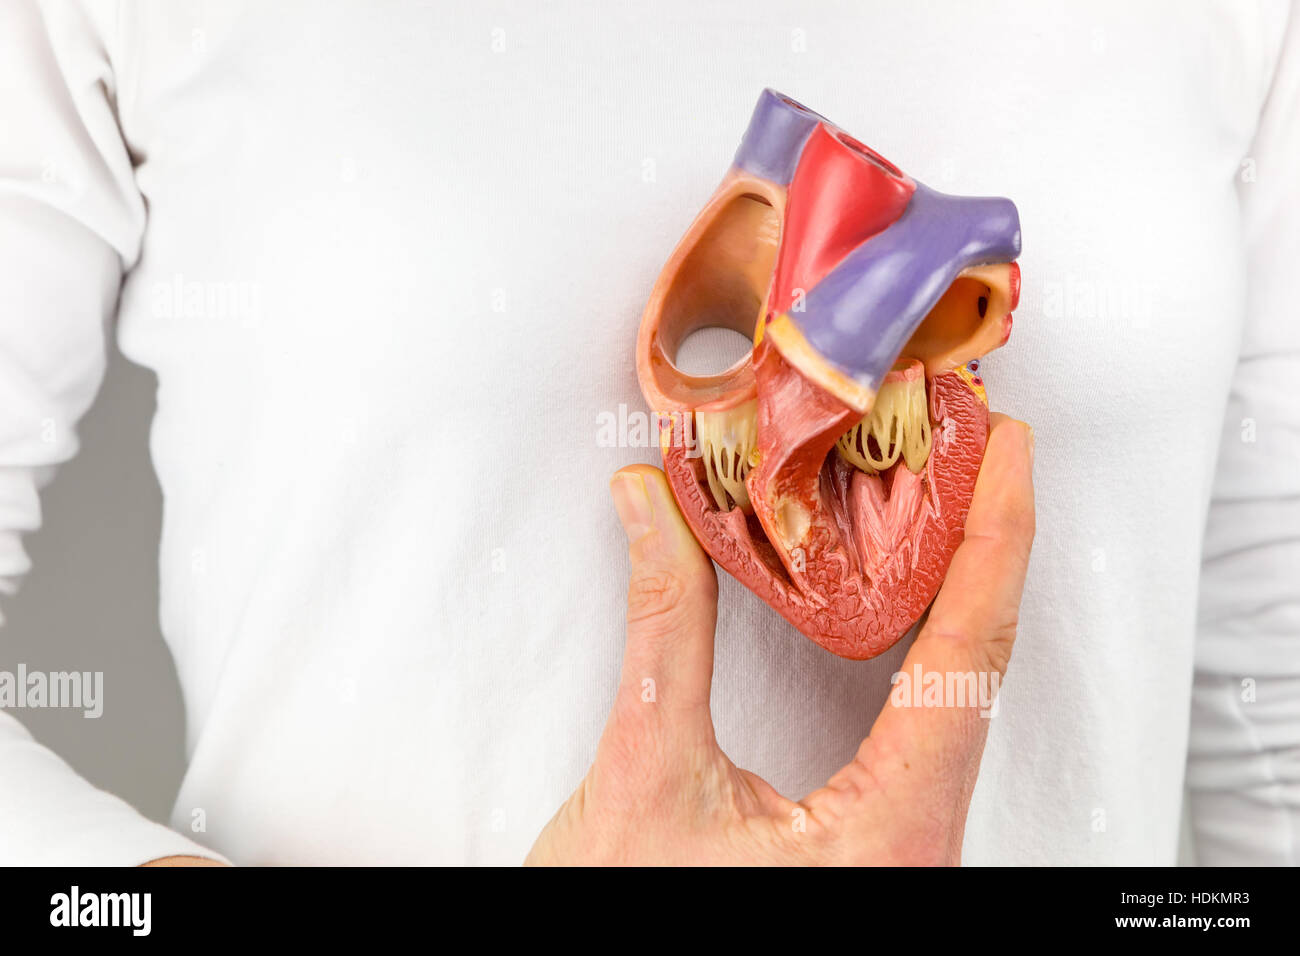 Woman holding human heart model at body Stock Photo